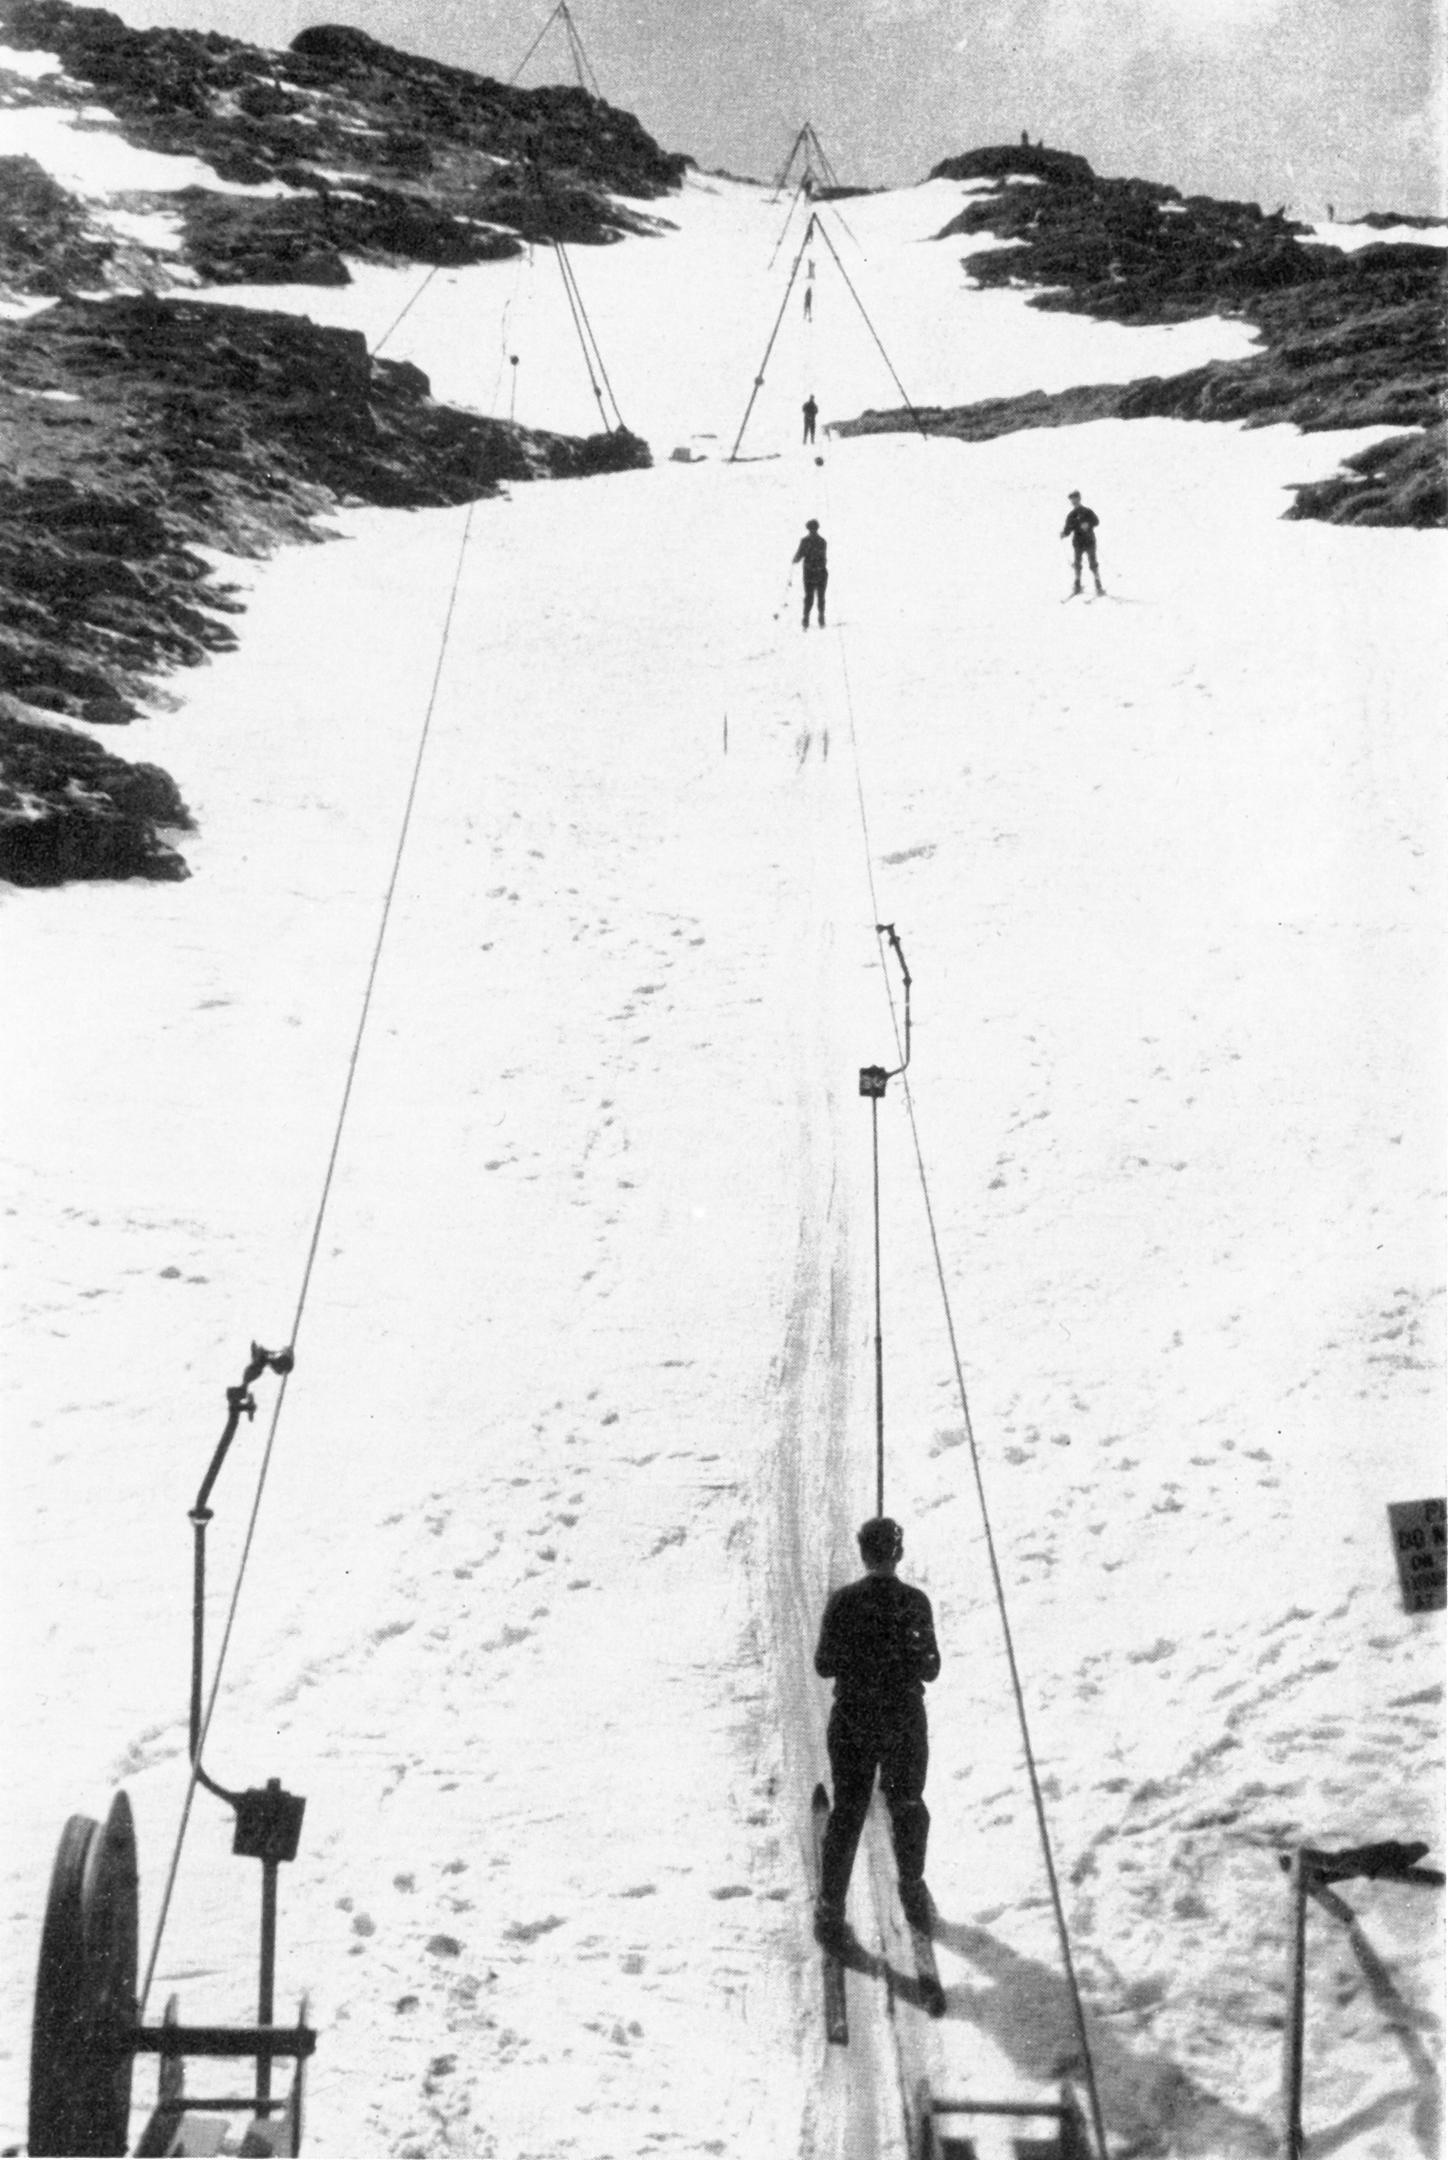 Philip Rankin, a former spitfire pilot, built the ski tow at Glencoe